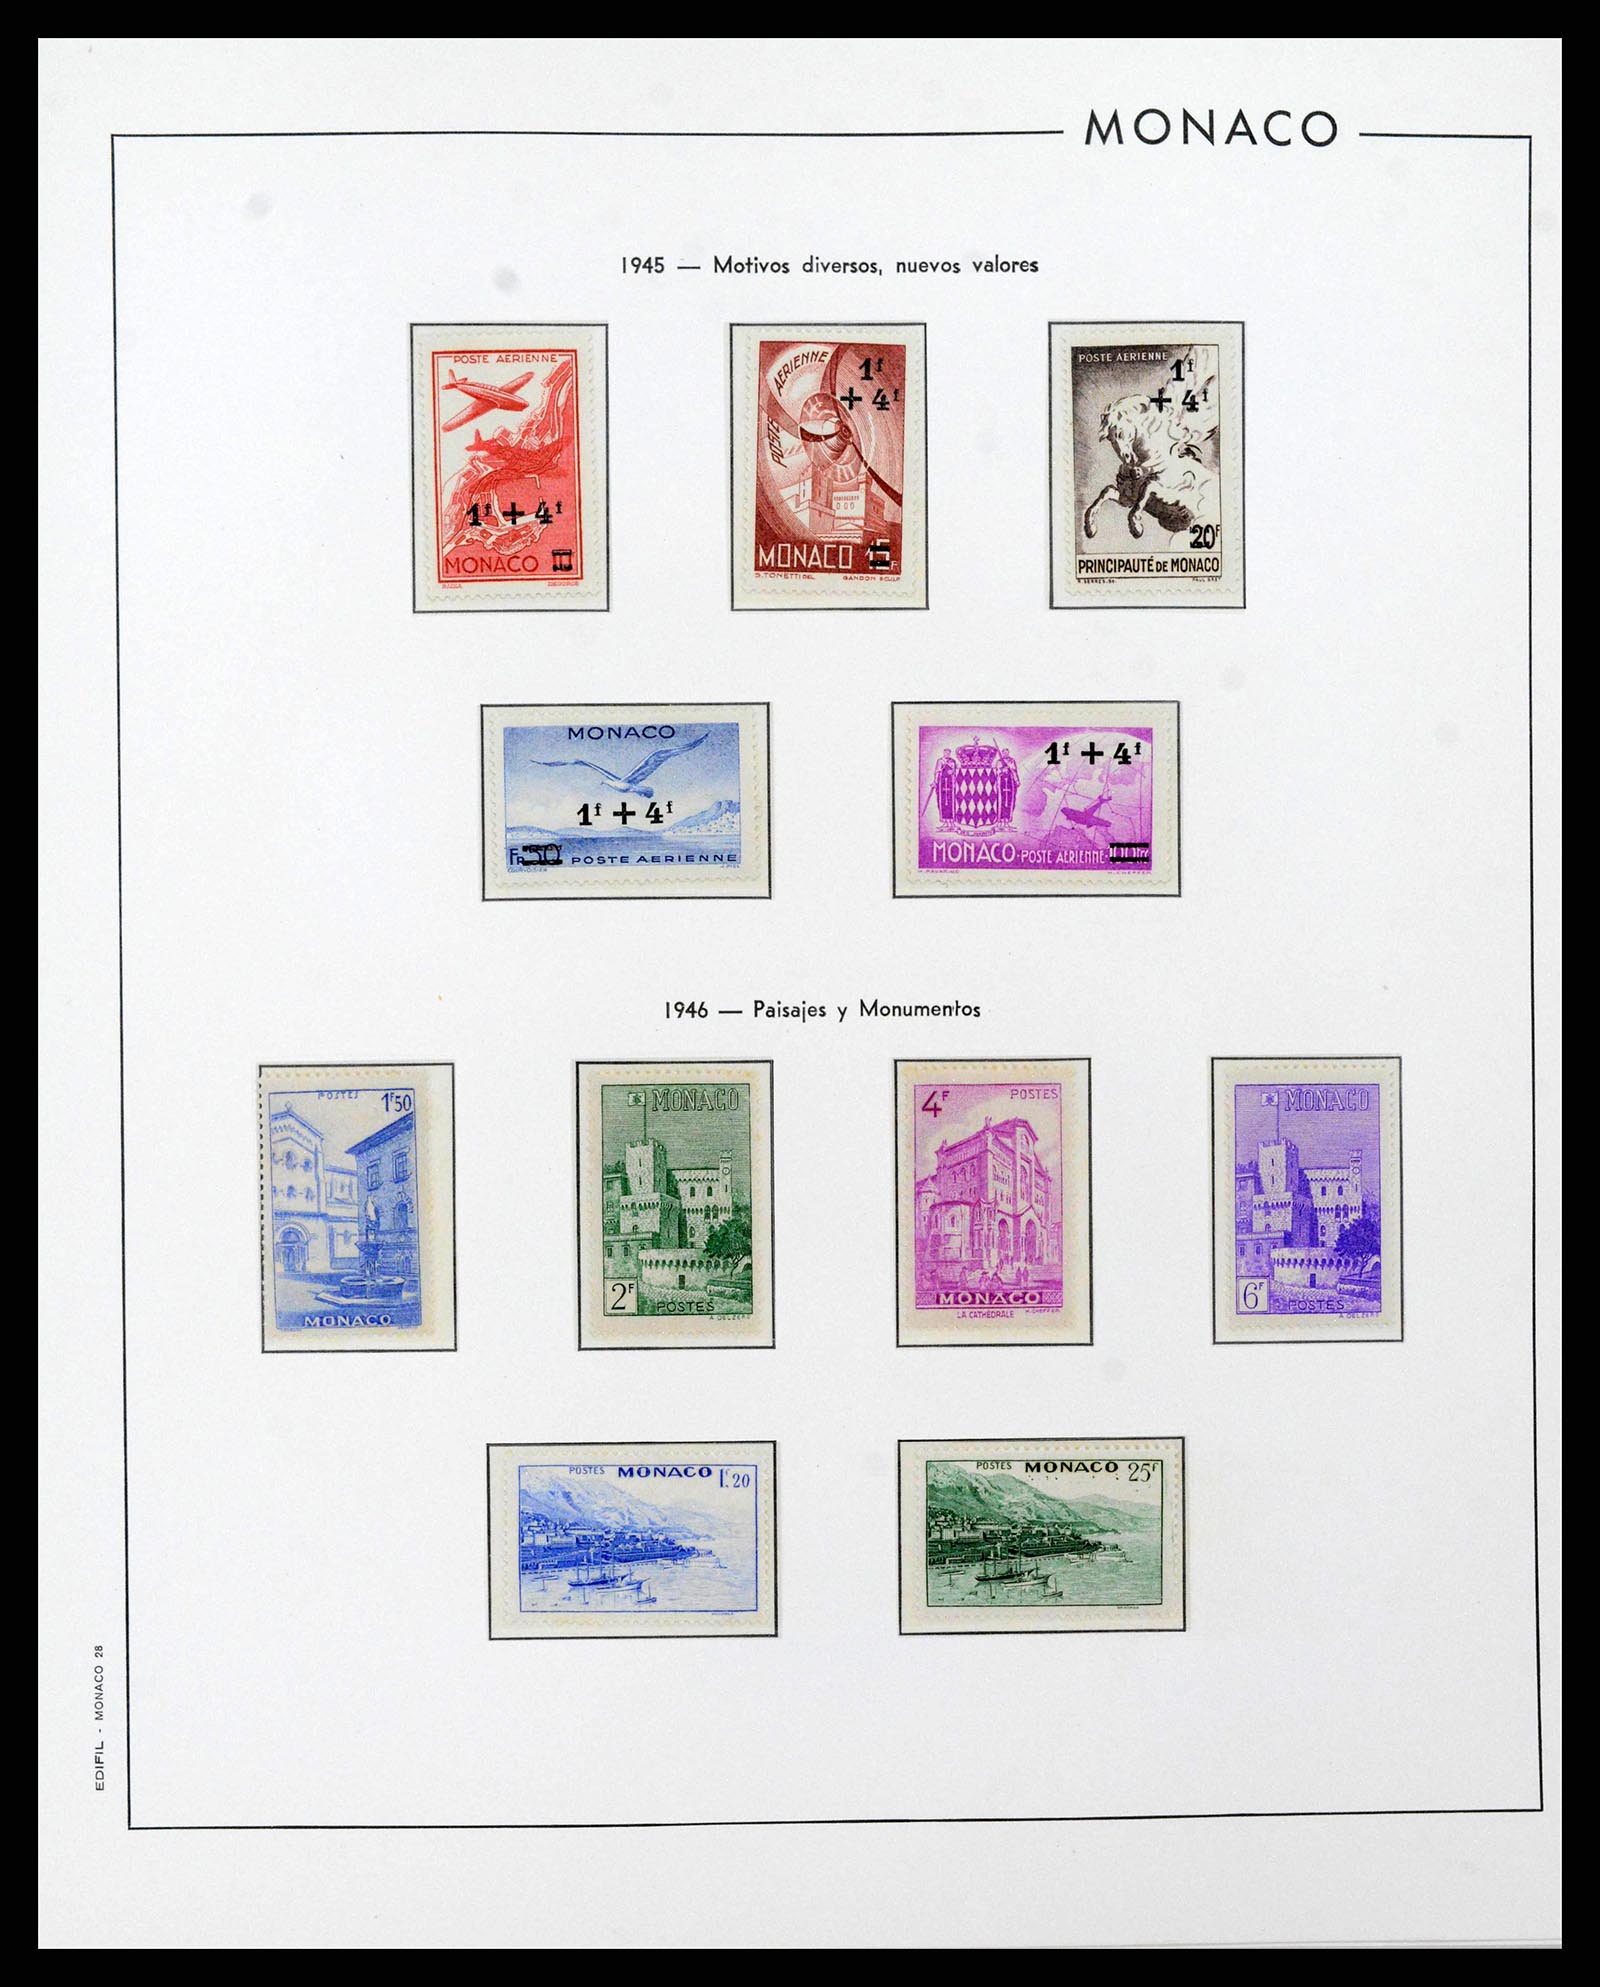 38283 0027 - Stamp collection 38283 Monaco 1885-1989.